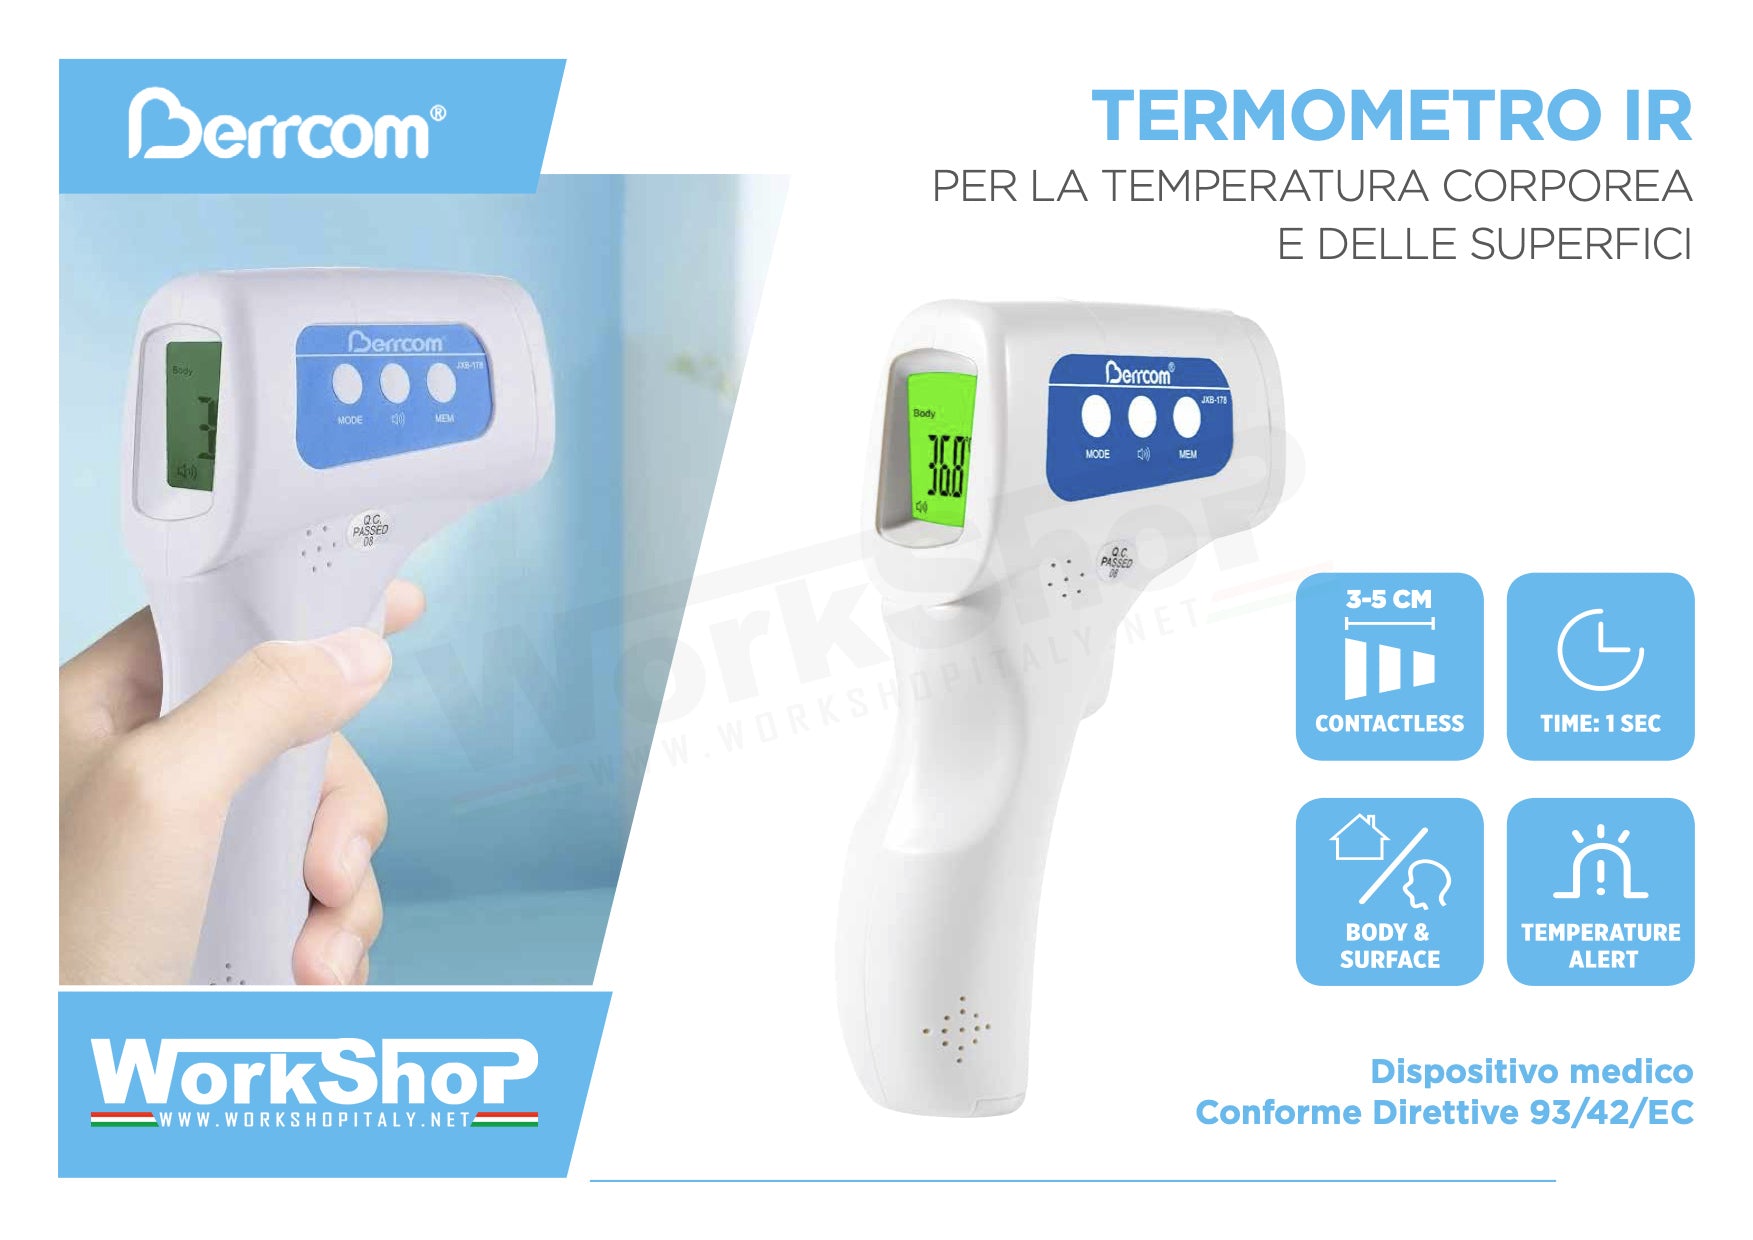 Termometro IR temperatura corporea Berrcom